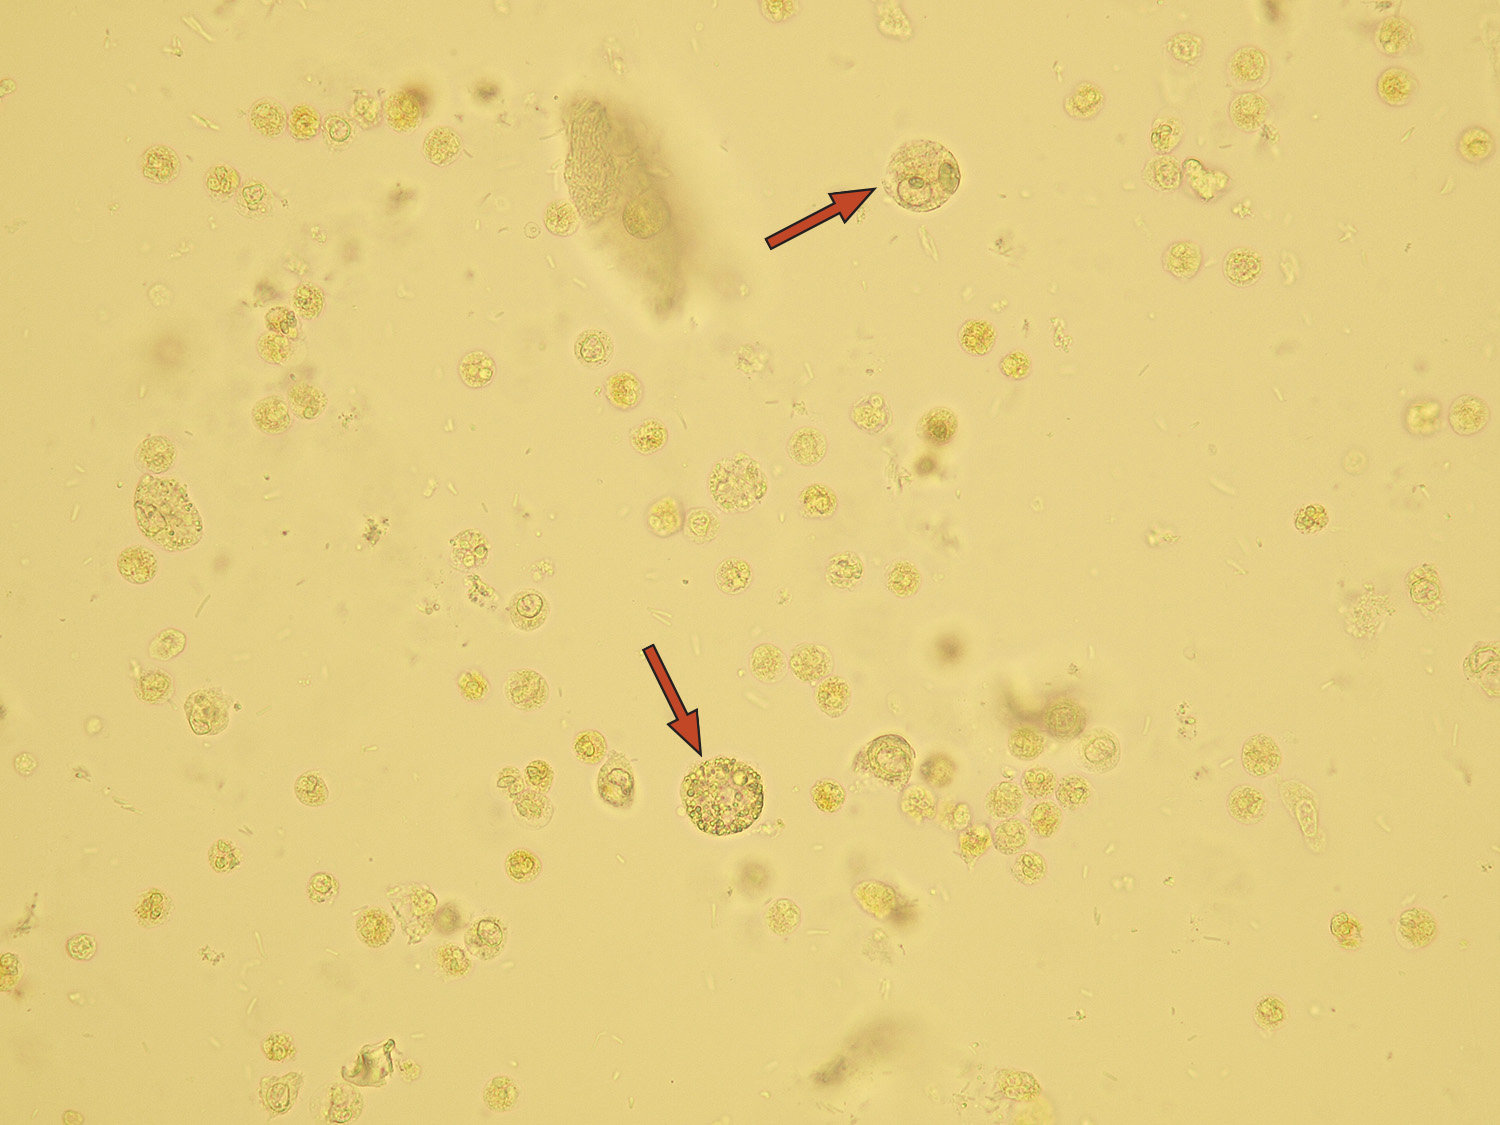 Leukocytes Wbcs Microscopic Analysis Of Urine Faculty Of Medicine Masaryk University 1886